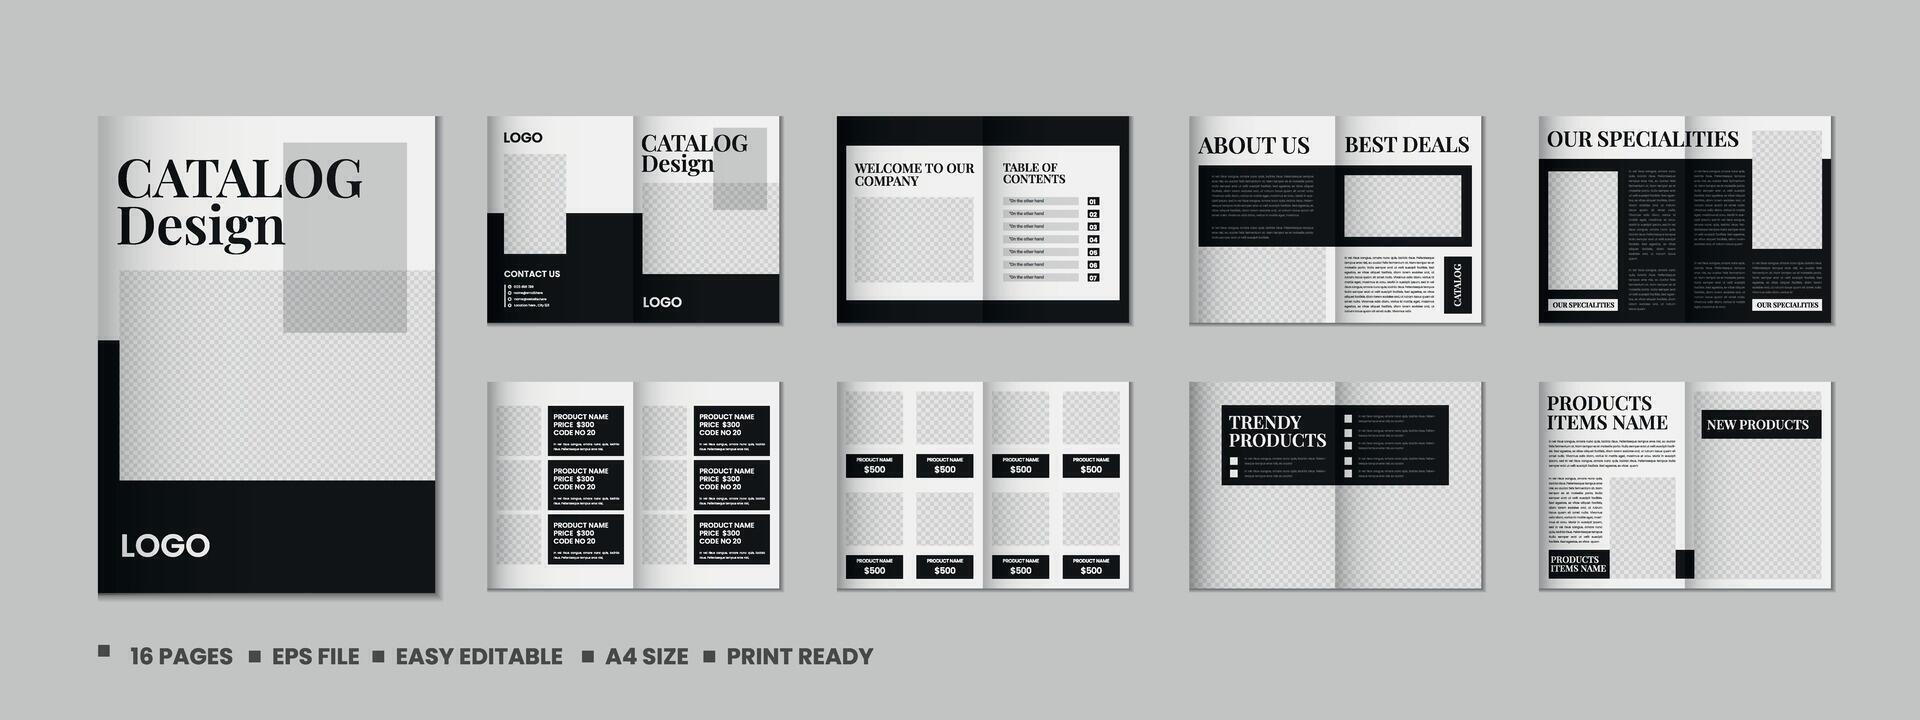 Catalogue design or product catalog template design vector